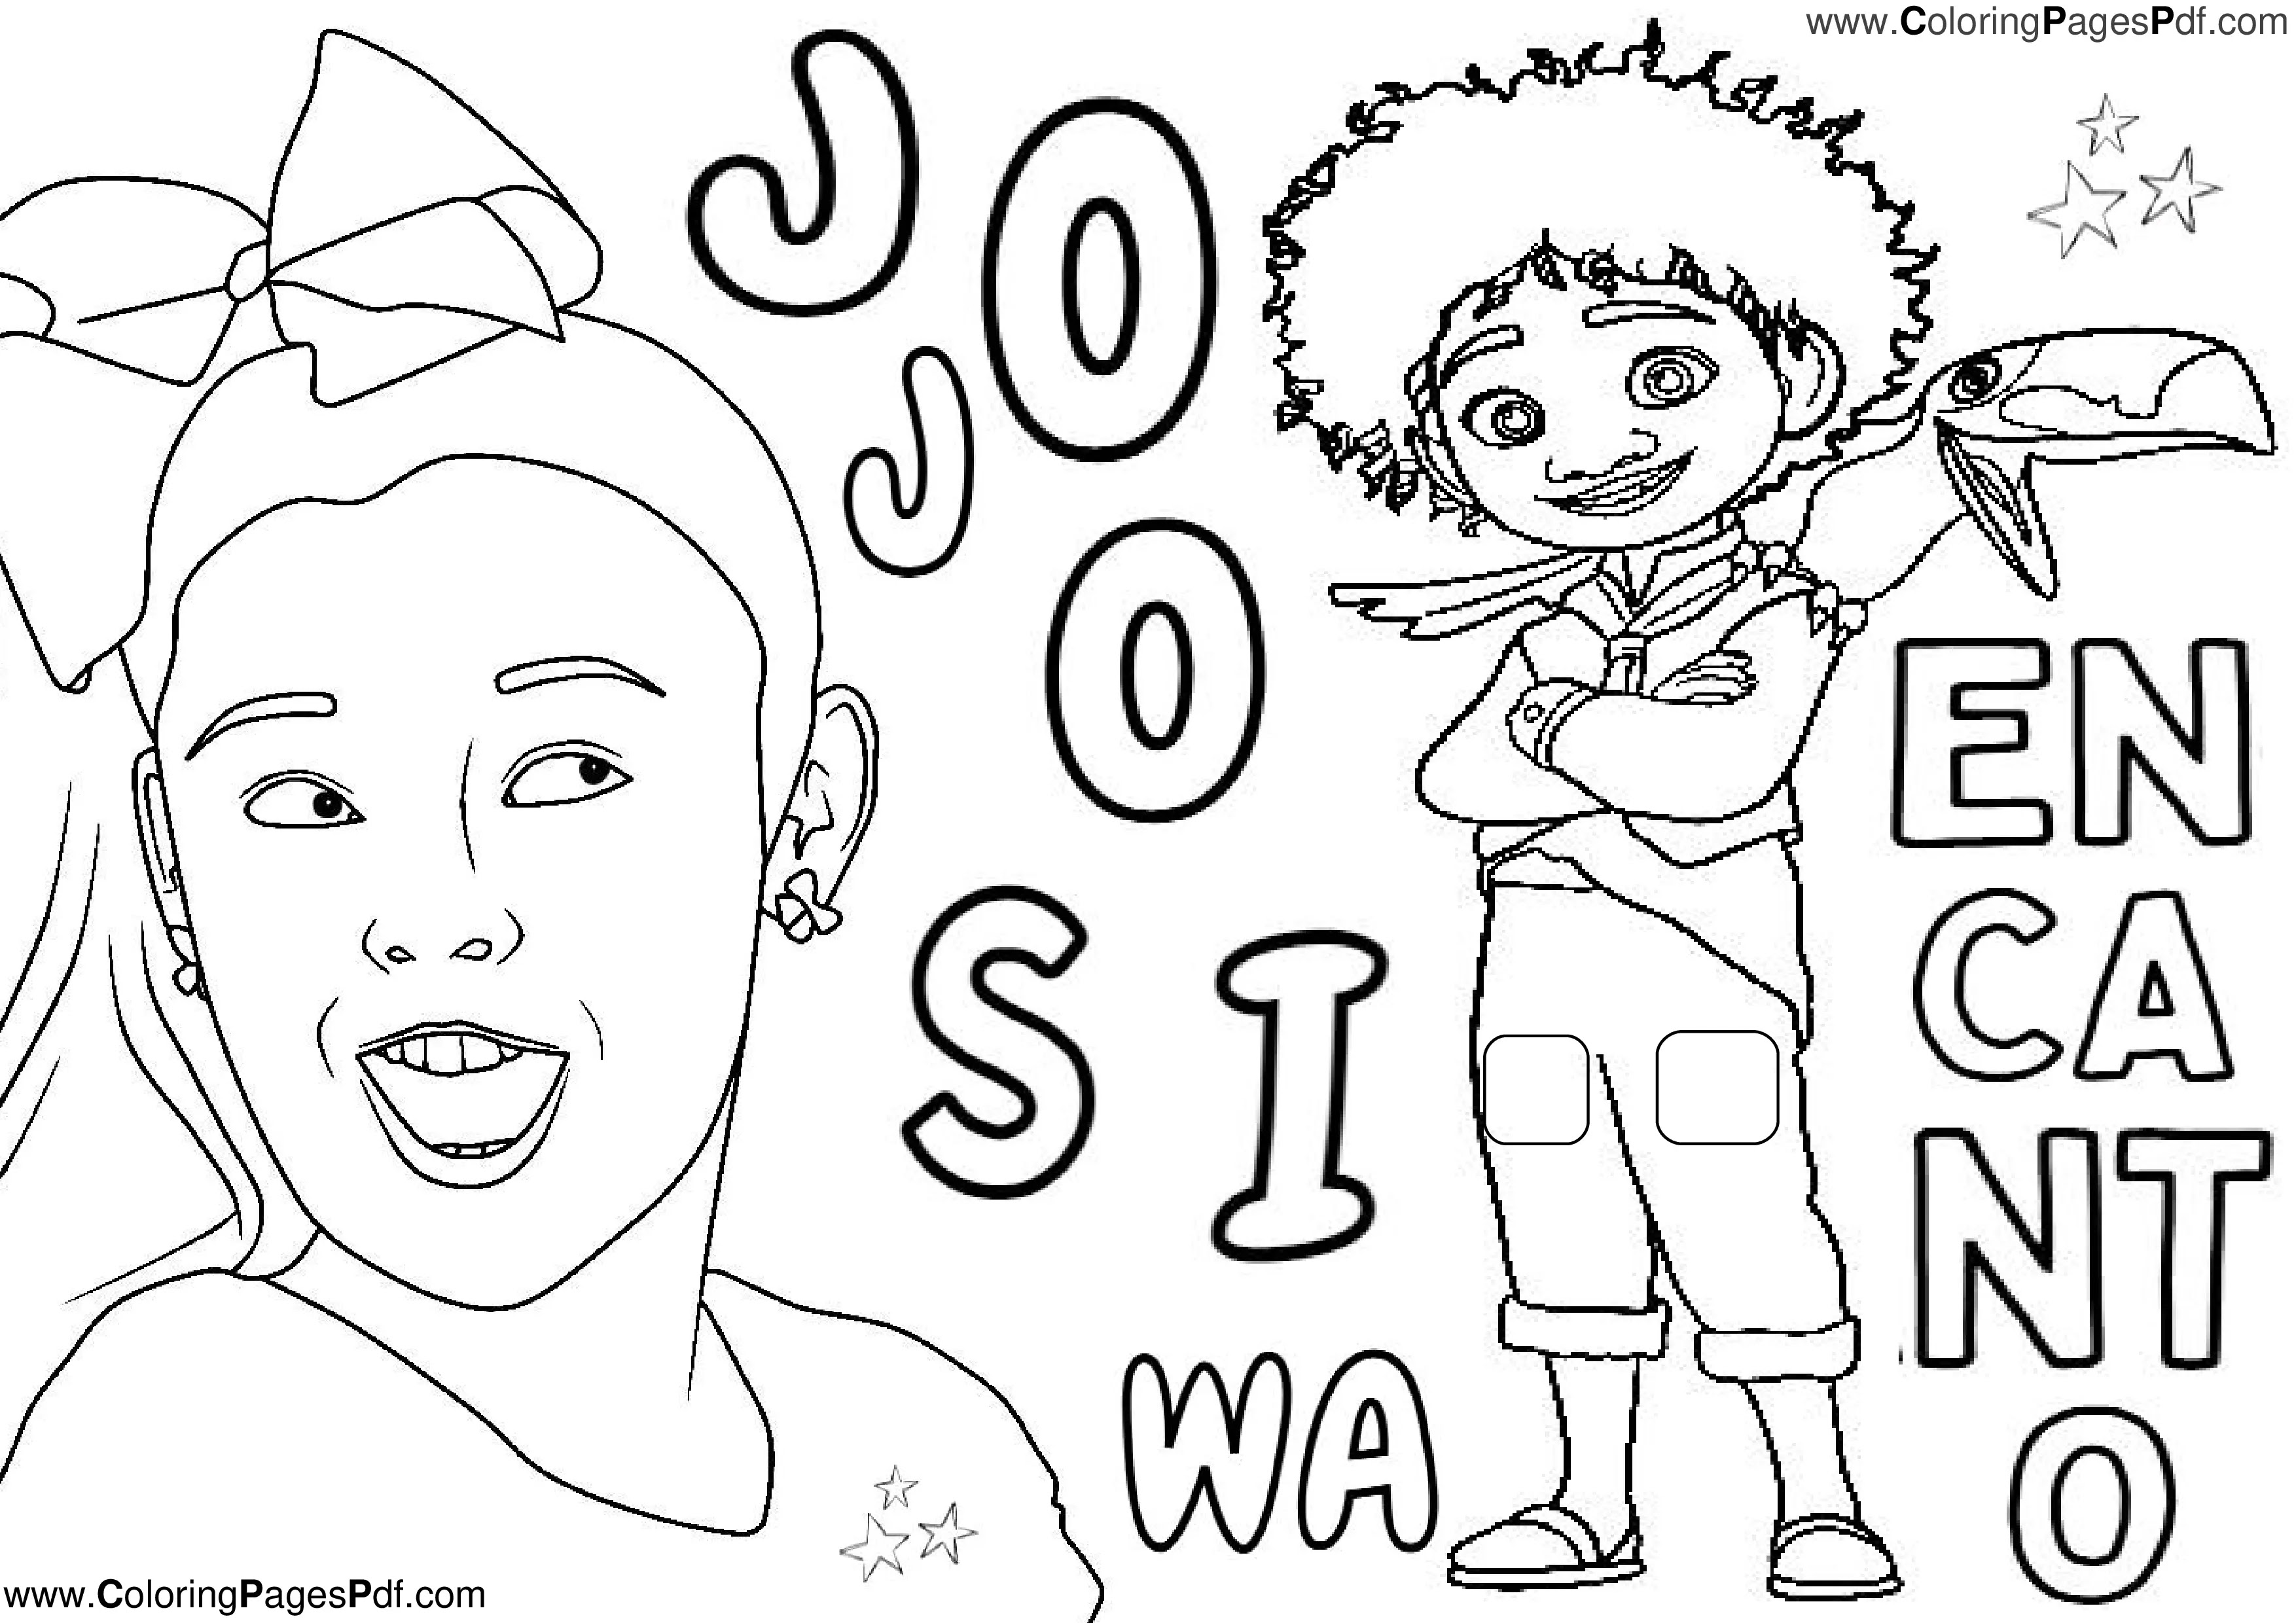 Jojo siwa & encanto coloring pages